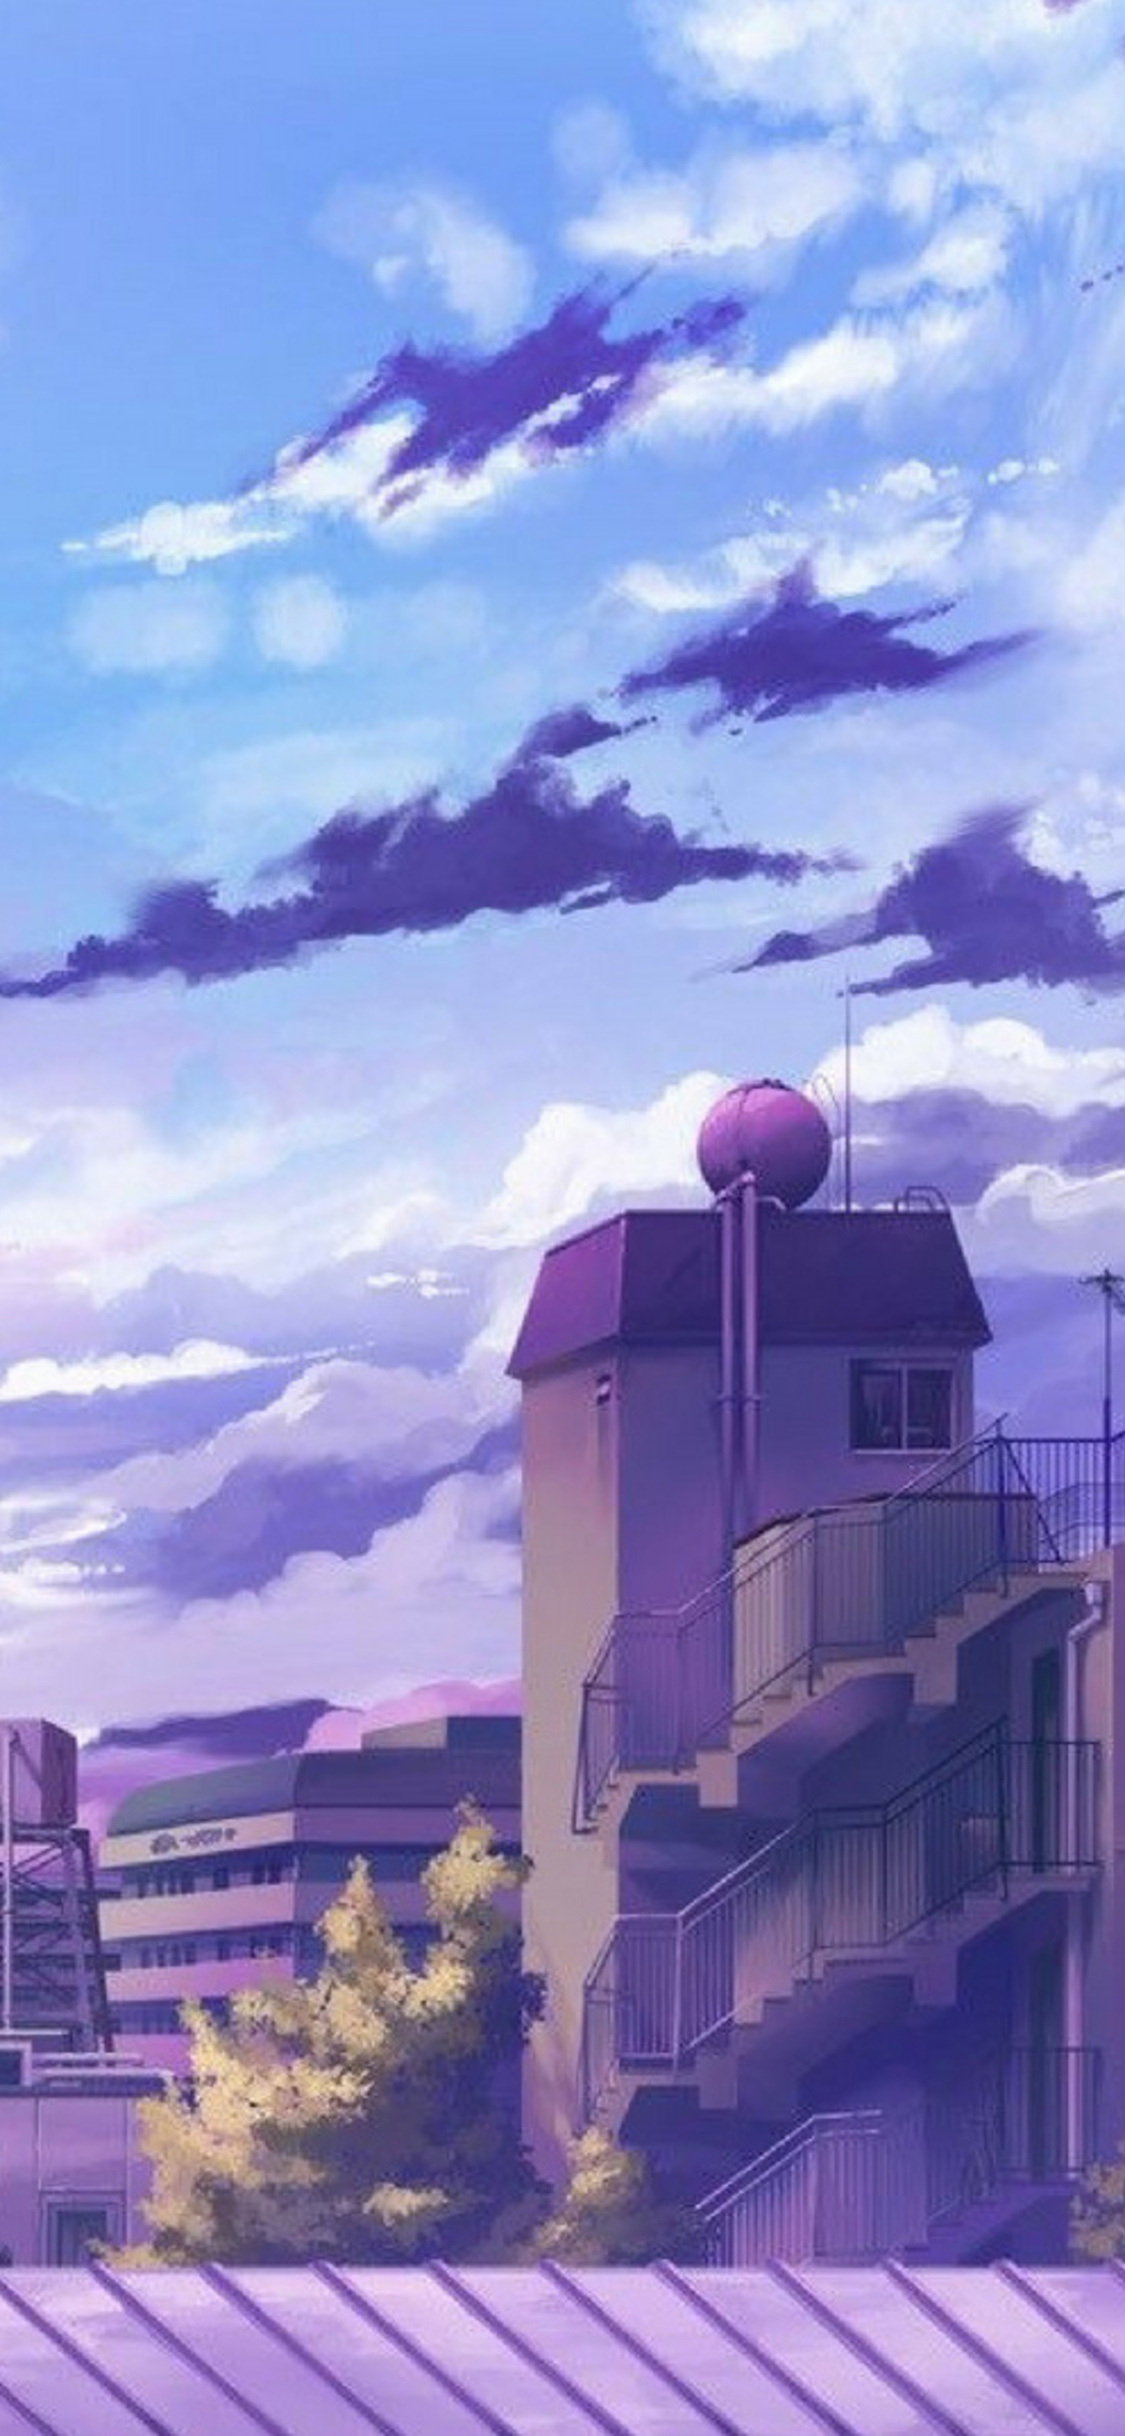 Anime wallpaper 1920x - Anime city